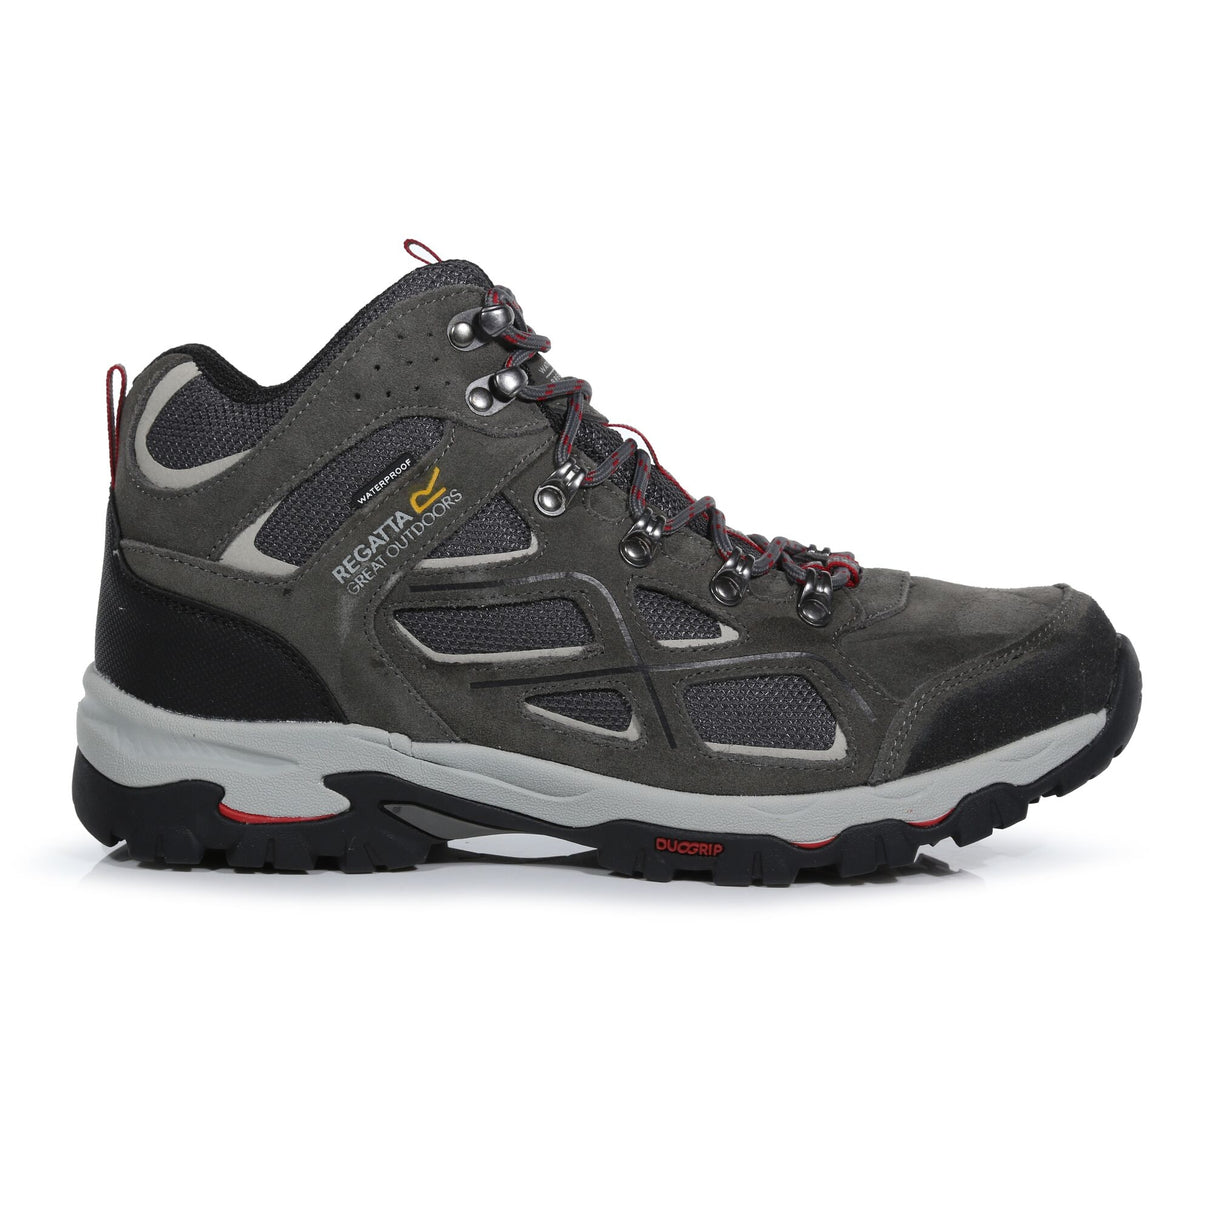 Regatta Tebay Mid Mens Waterproof Walking Hiking Boots - Grey/Red